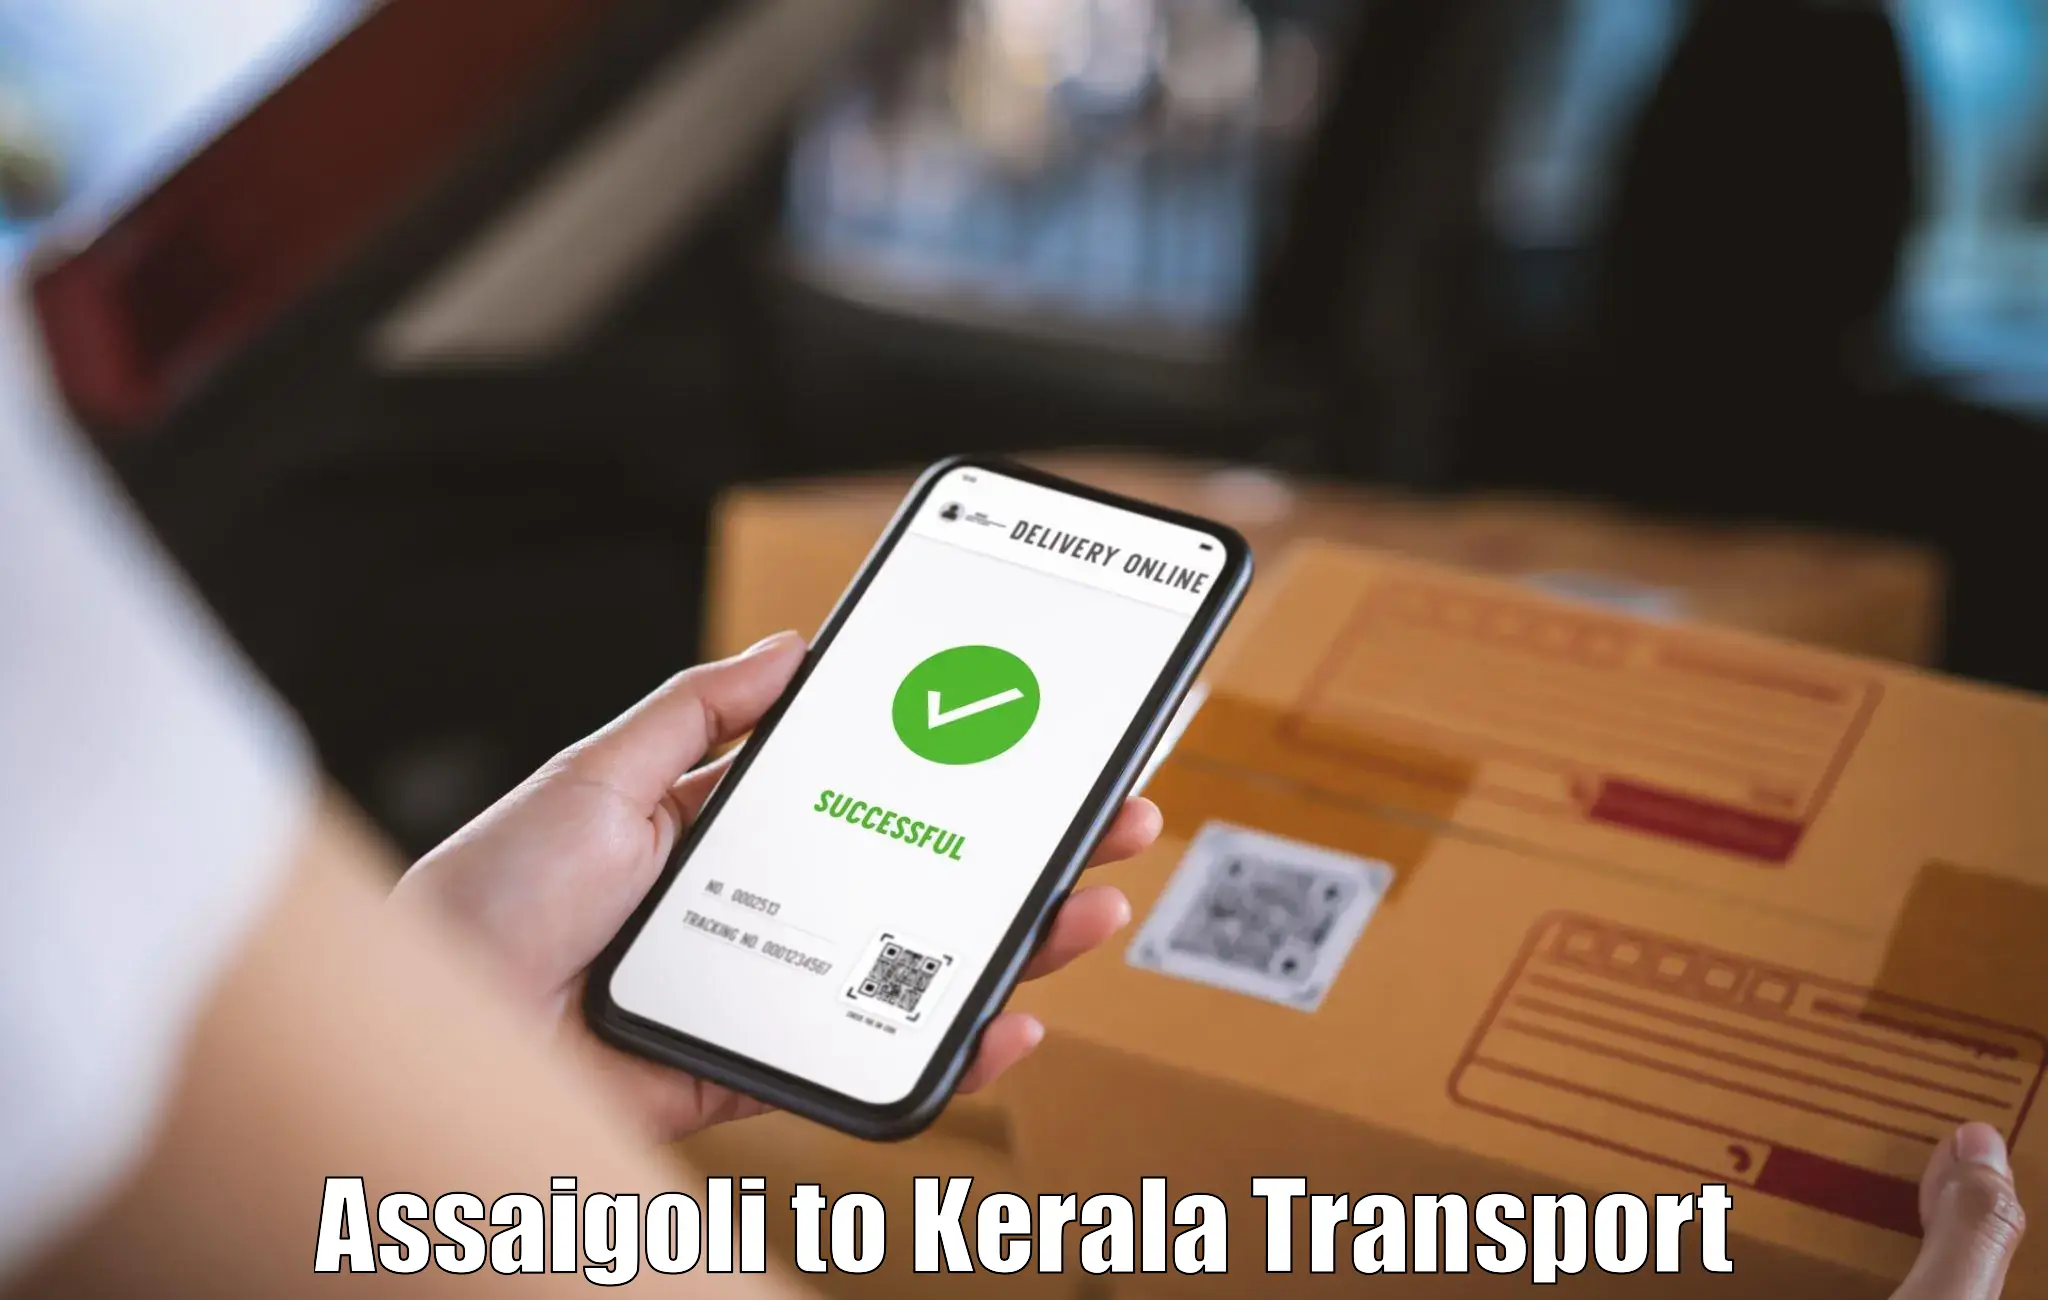 Transport in sharing Assaigoli to Kottayam